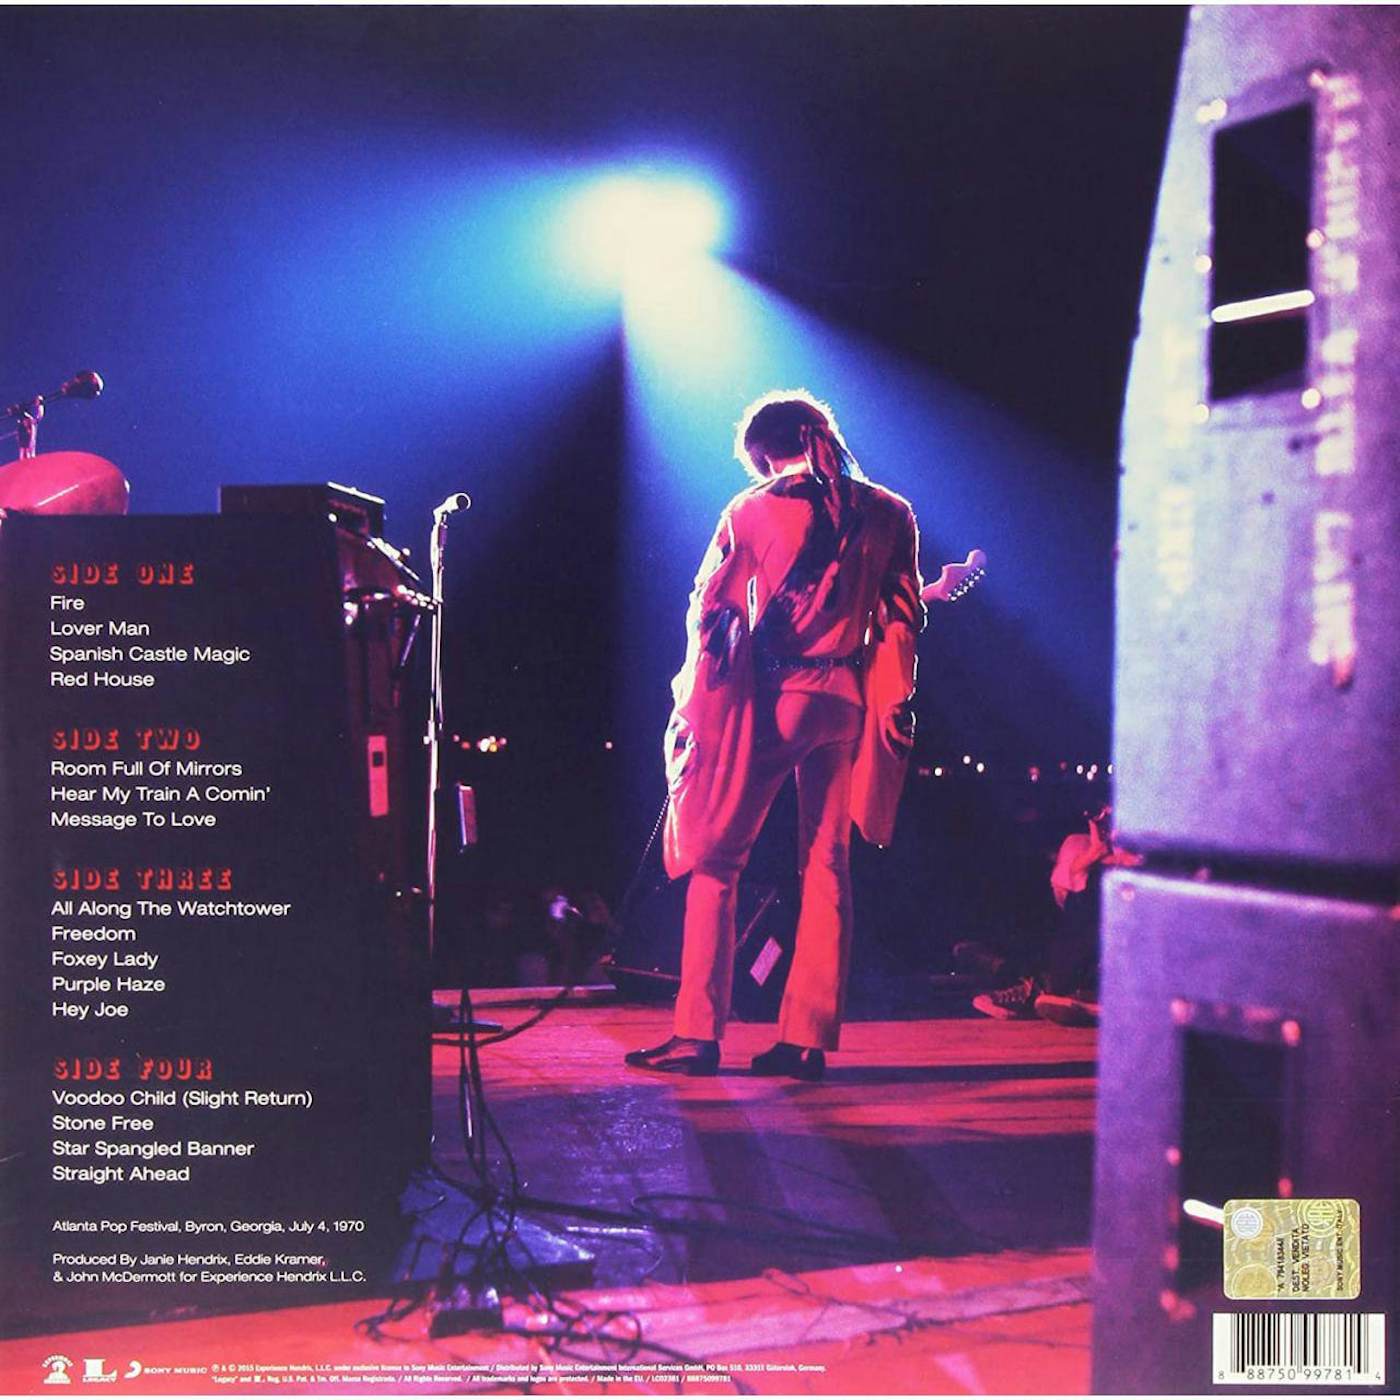 Jimi Hendrix Freedom: Atlanta Pop Festival (2LP/200g) Vinyl Record